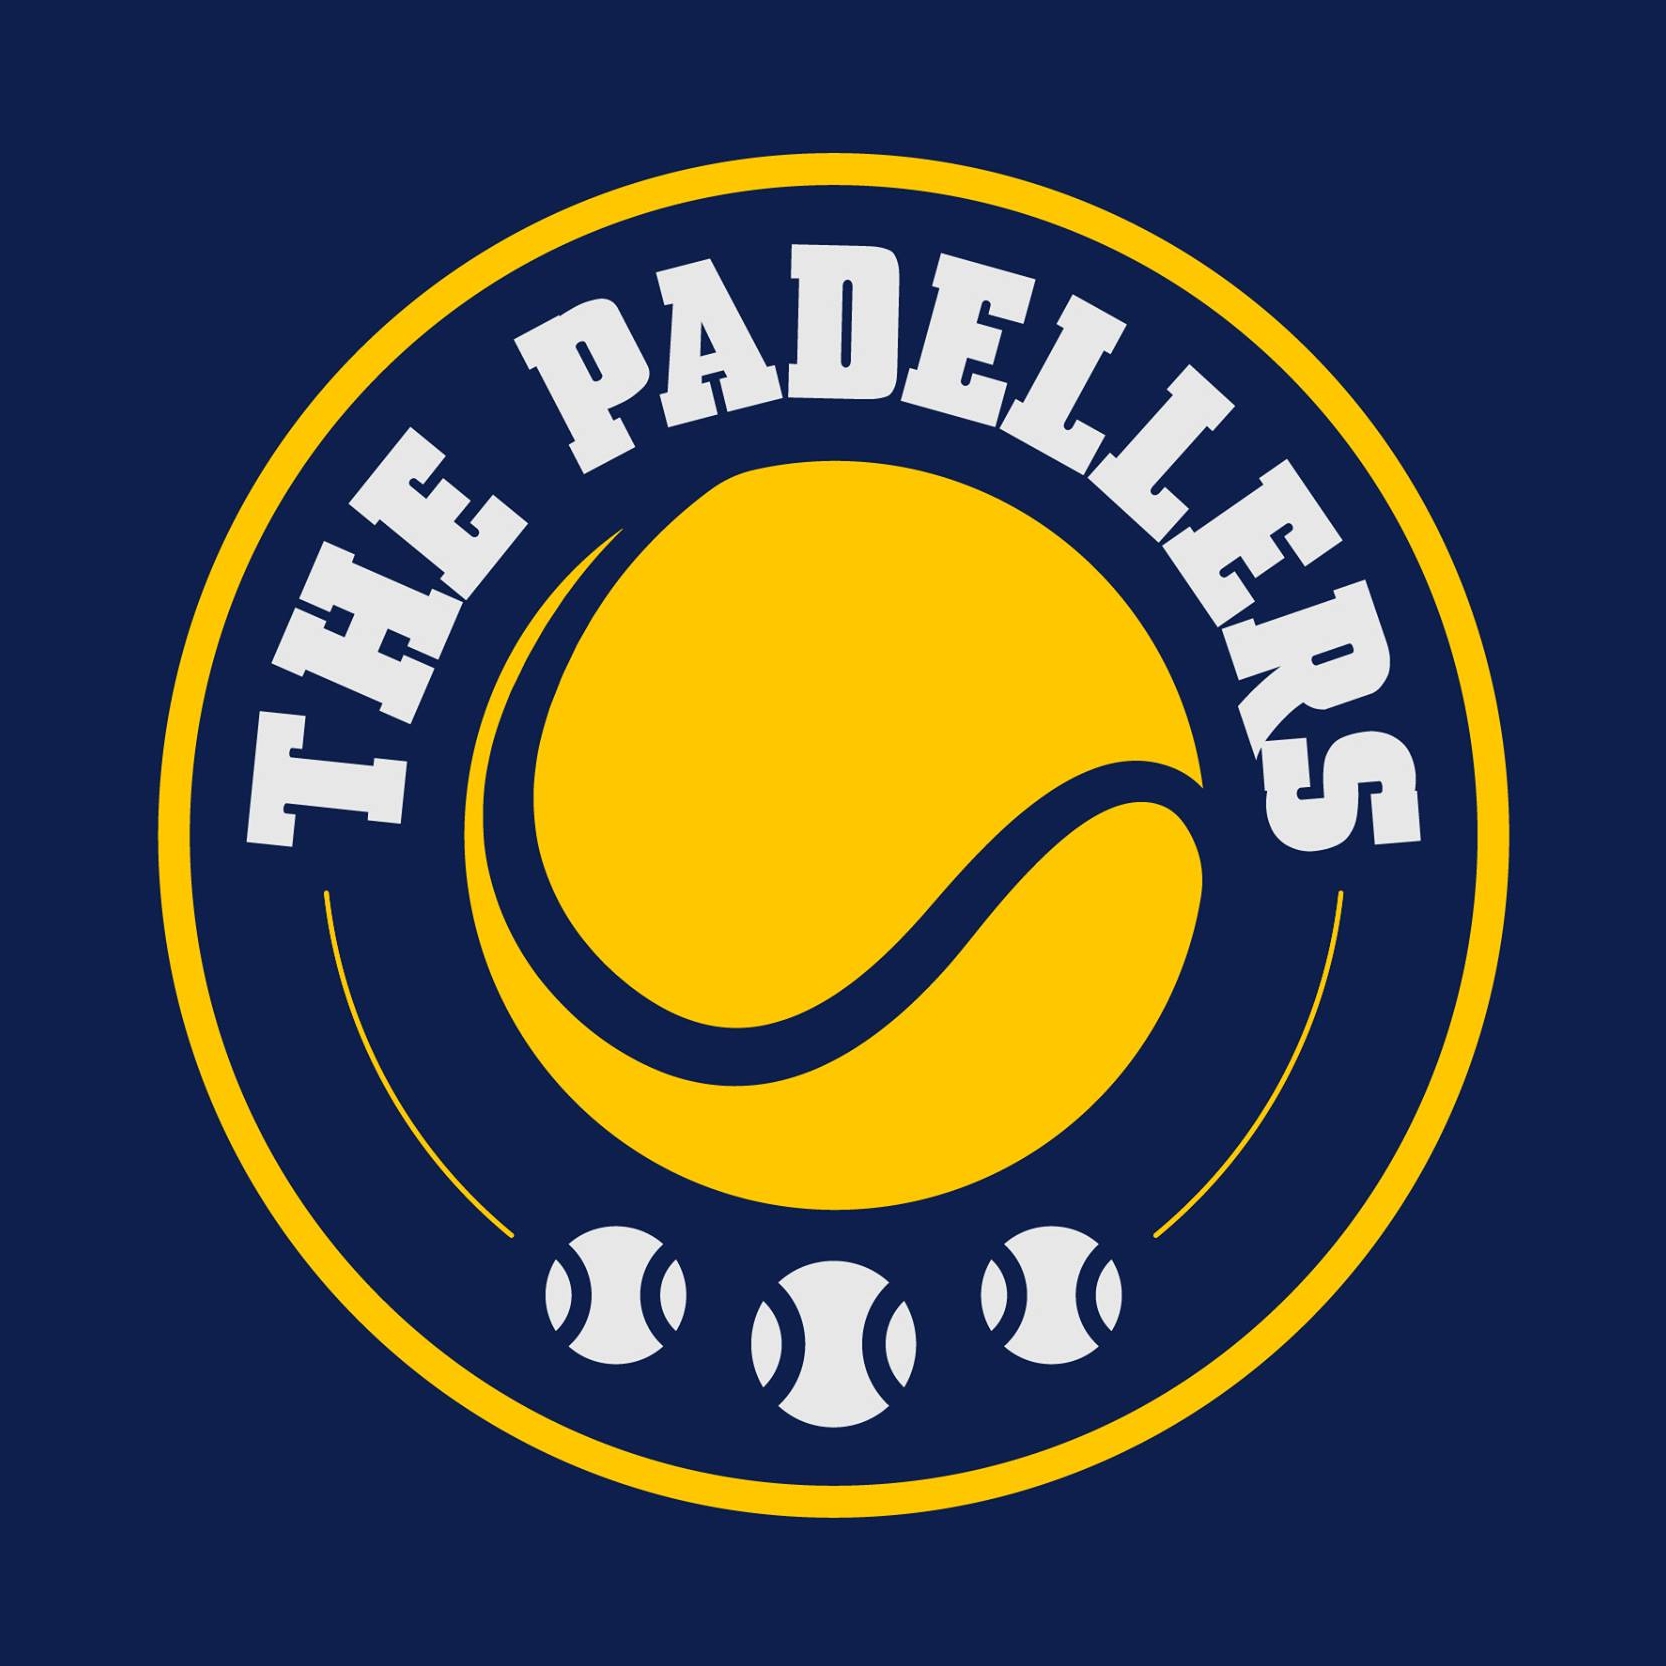 Profile image of venue The Padellers - Rosmalen